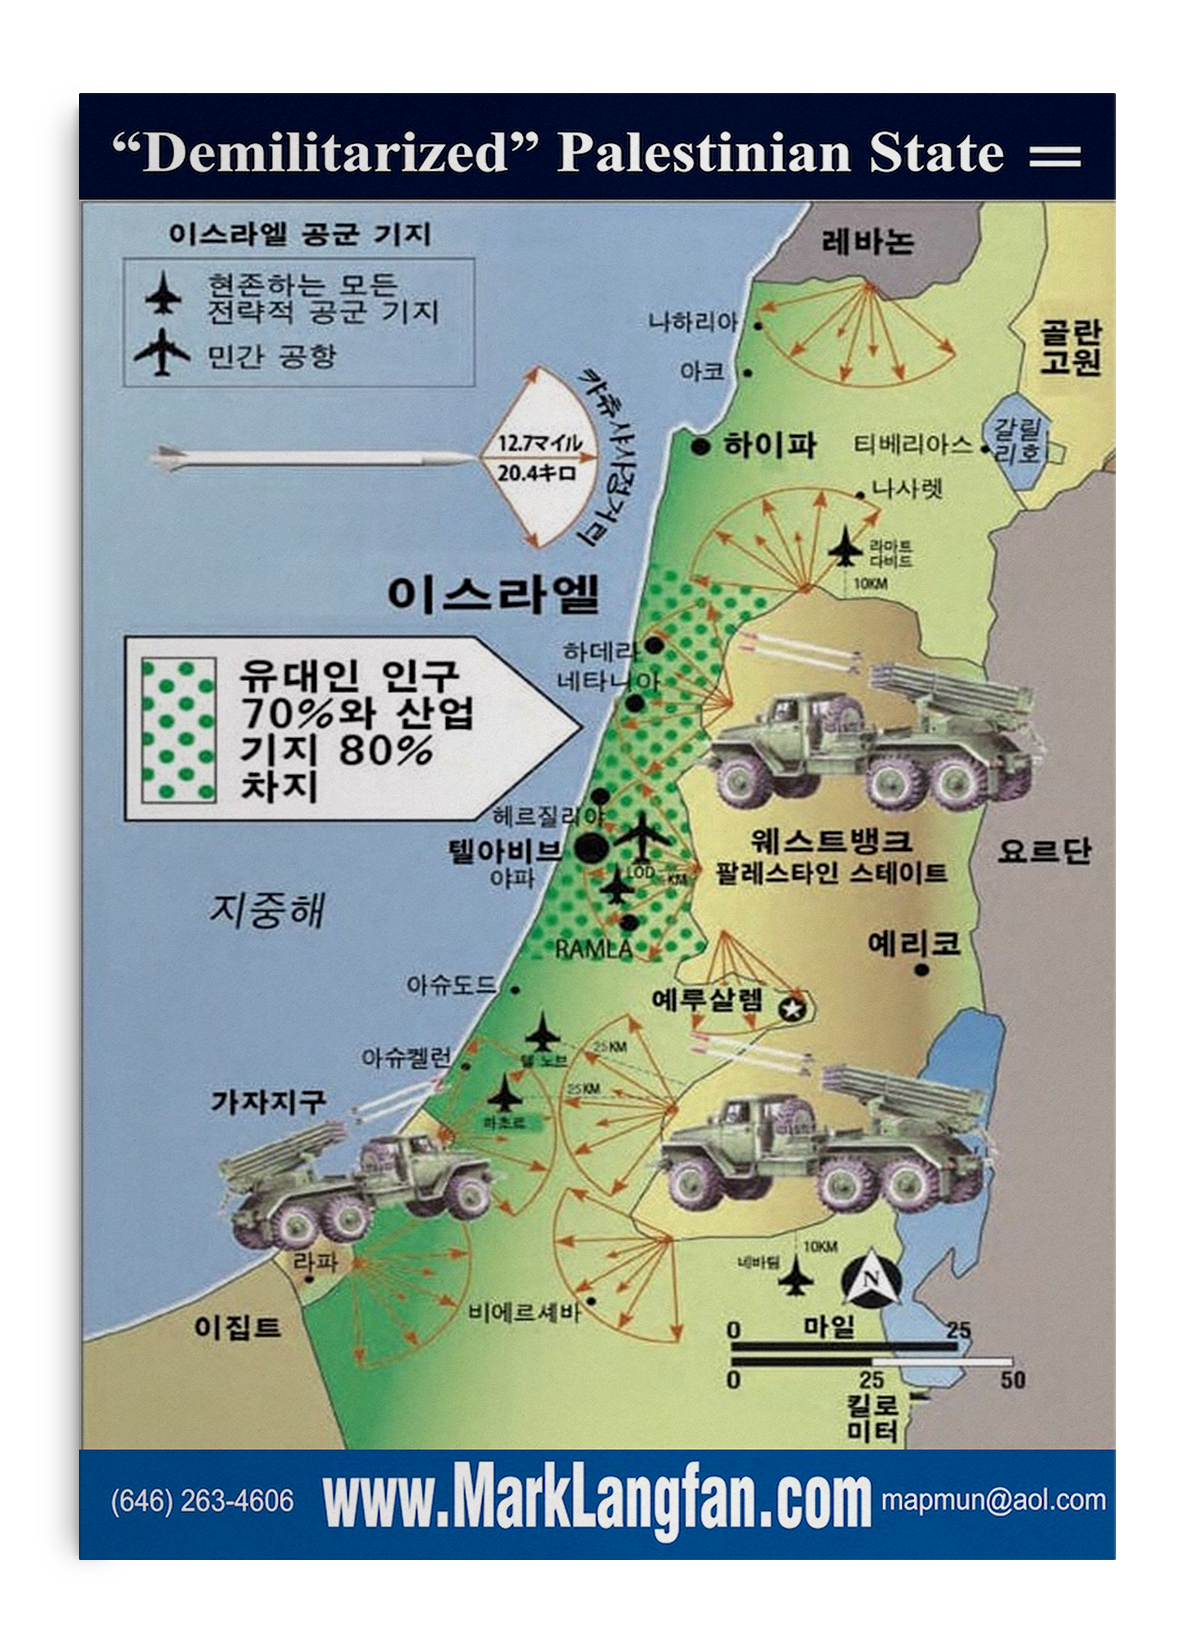 demilitarized palestinian state korean